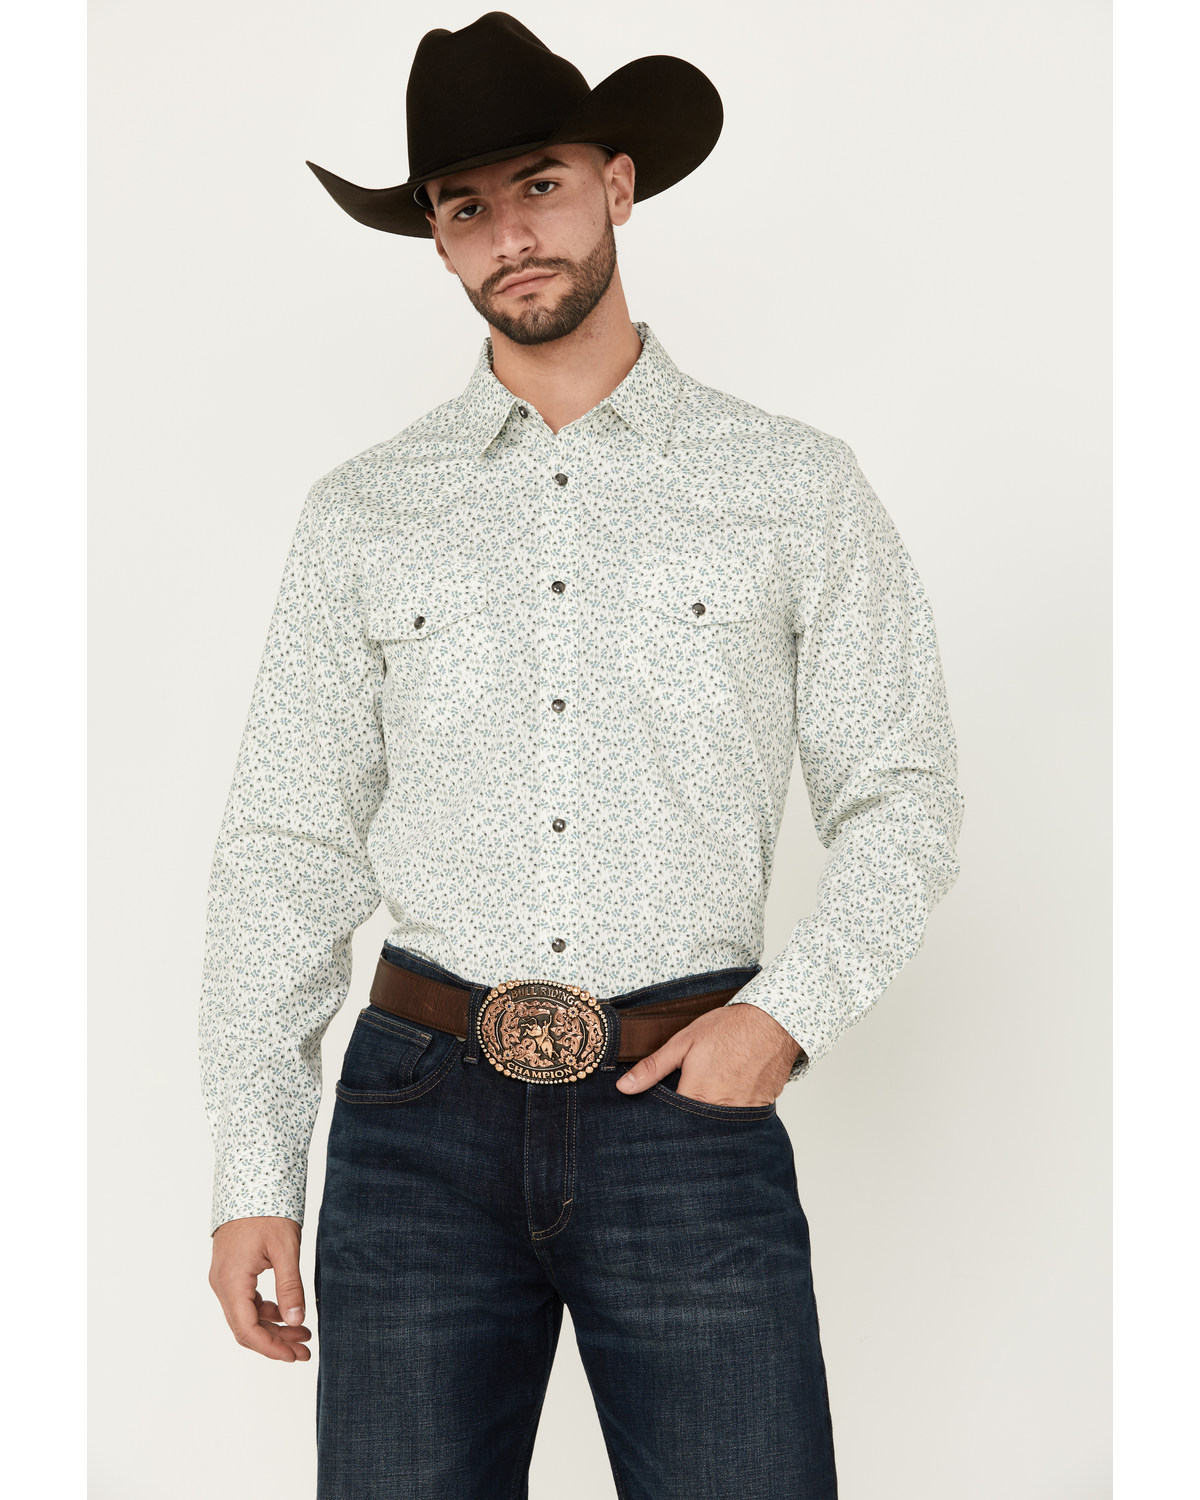 Gibson Men's La Salle Floral Print Long Sleeve Snap Western Shirt